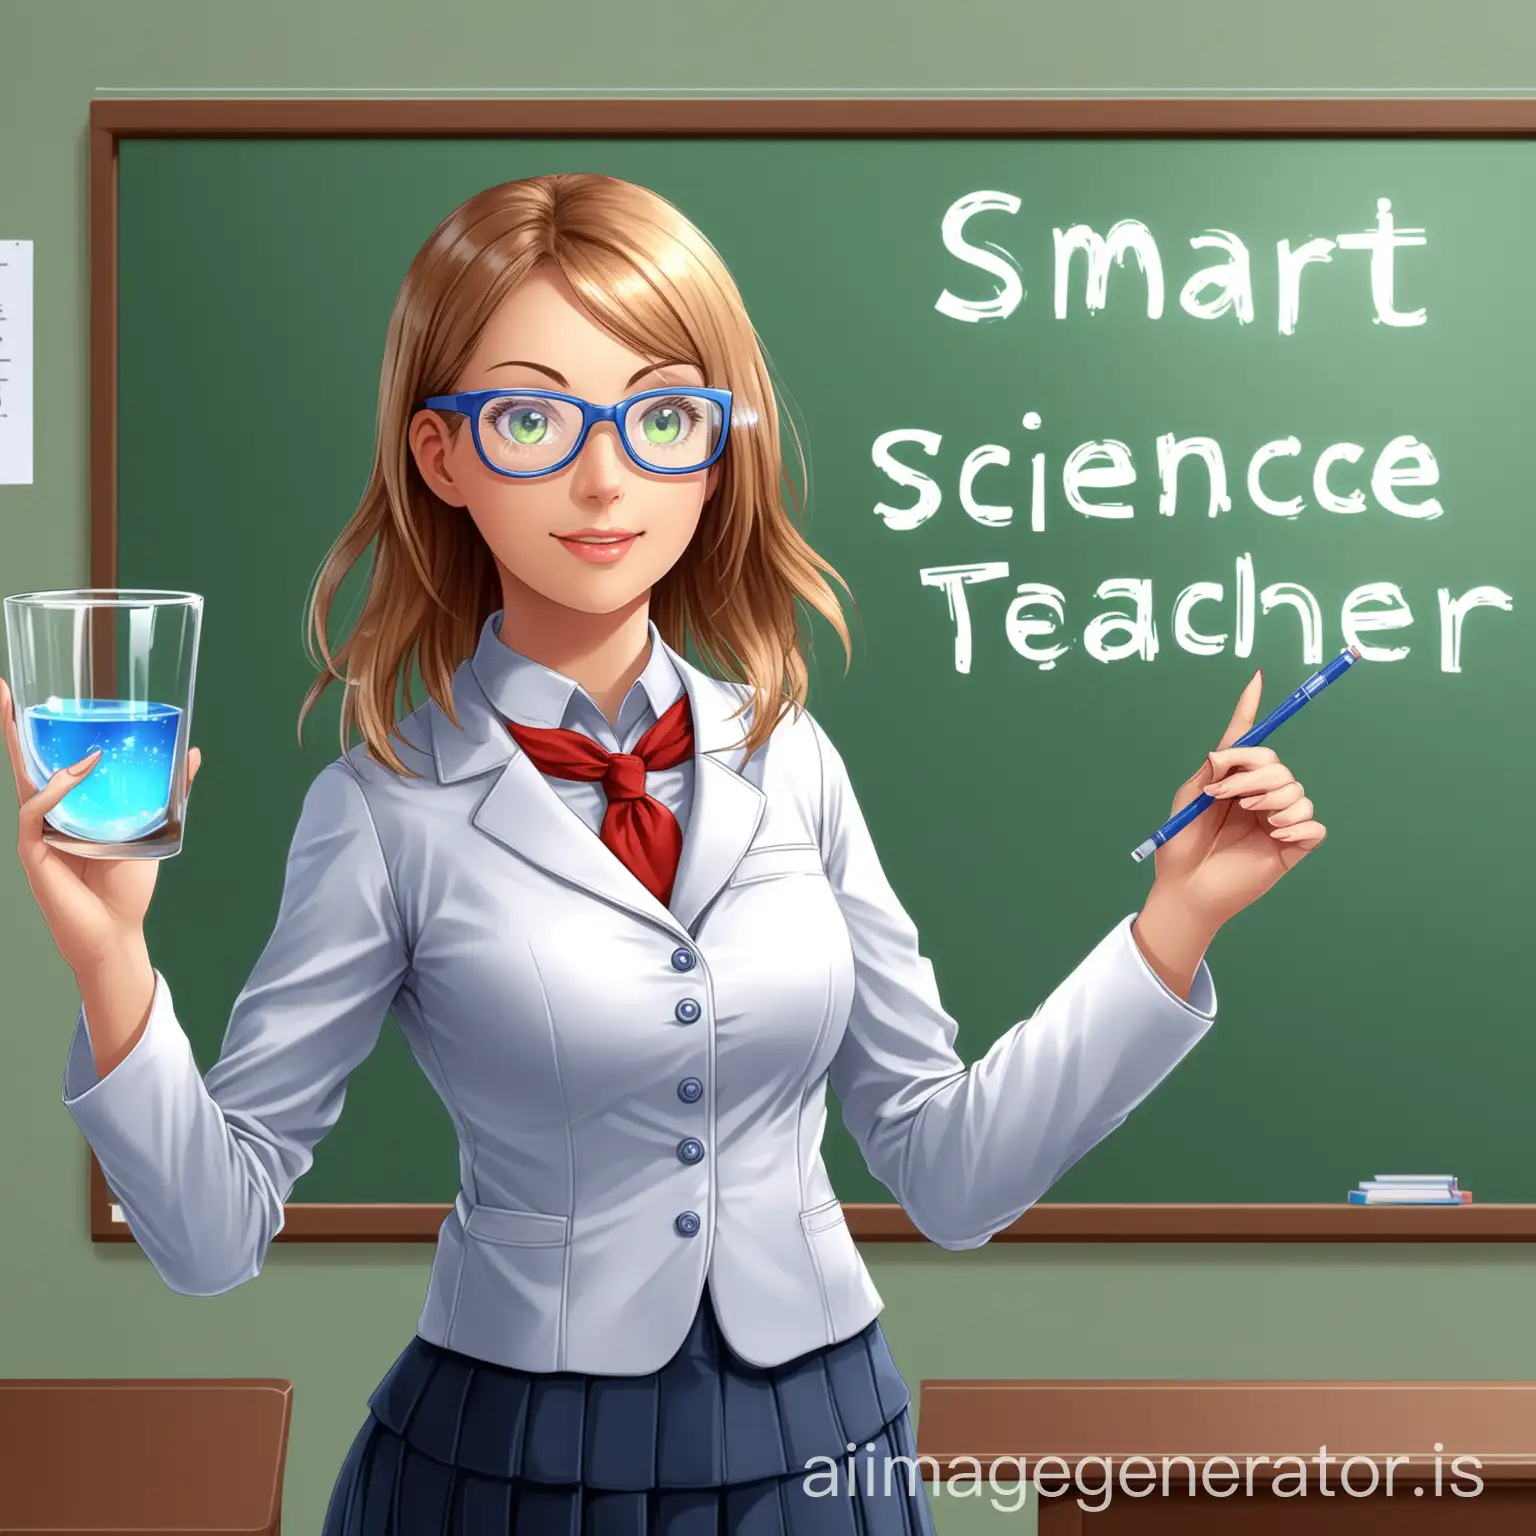 Smart-Girl-Teacher-with-Glasses-Advertising-Science-Lesson